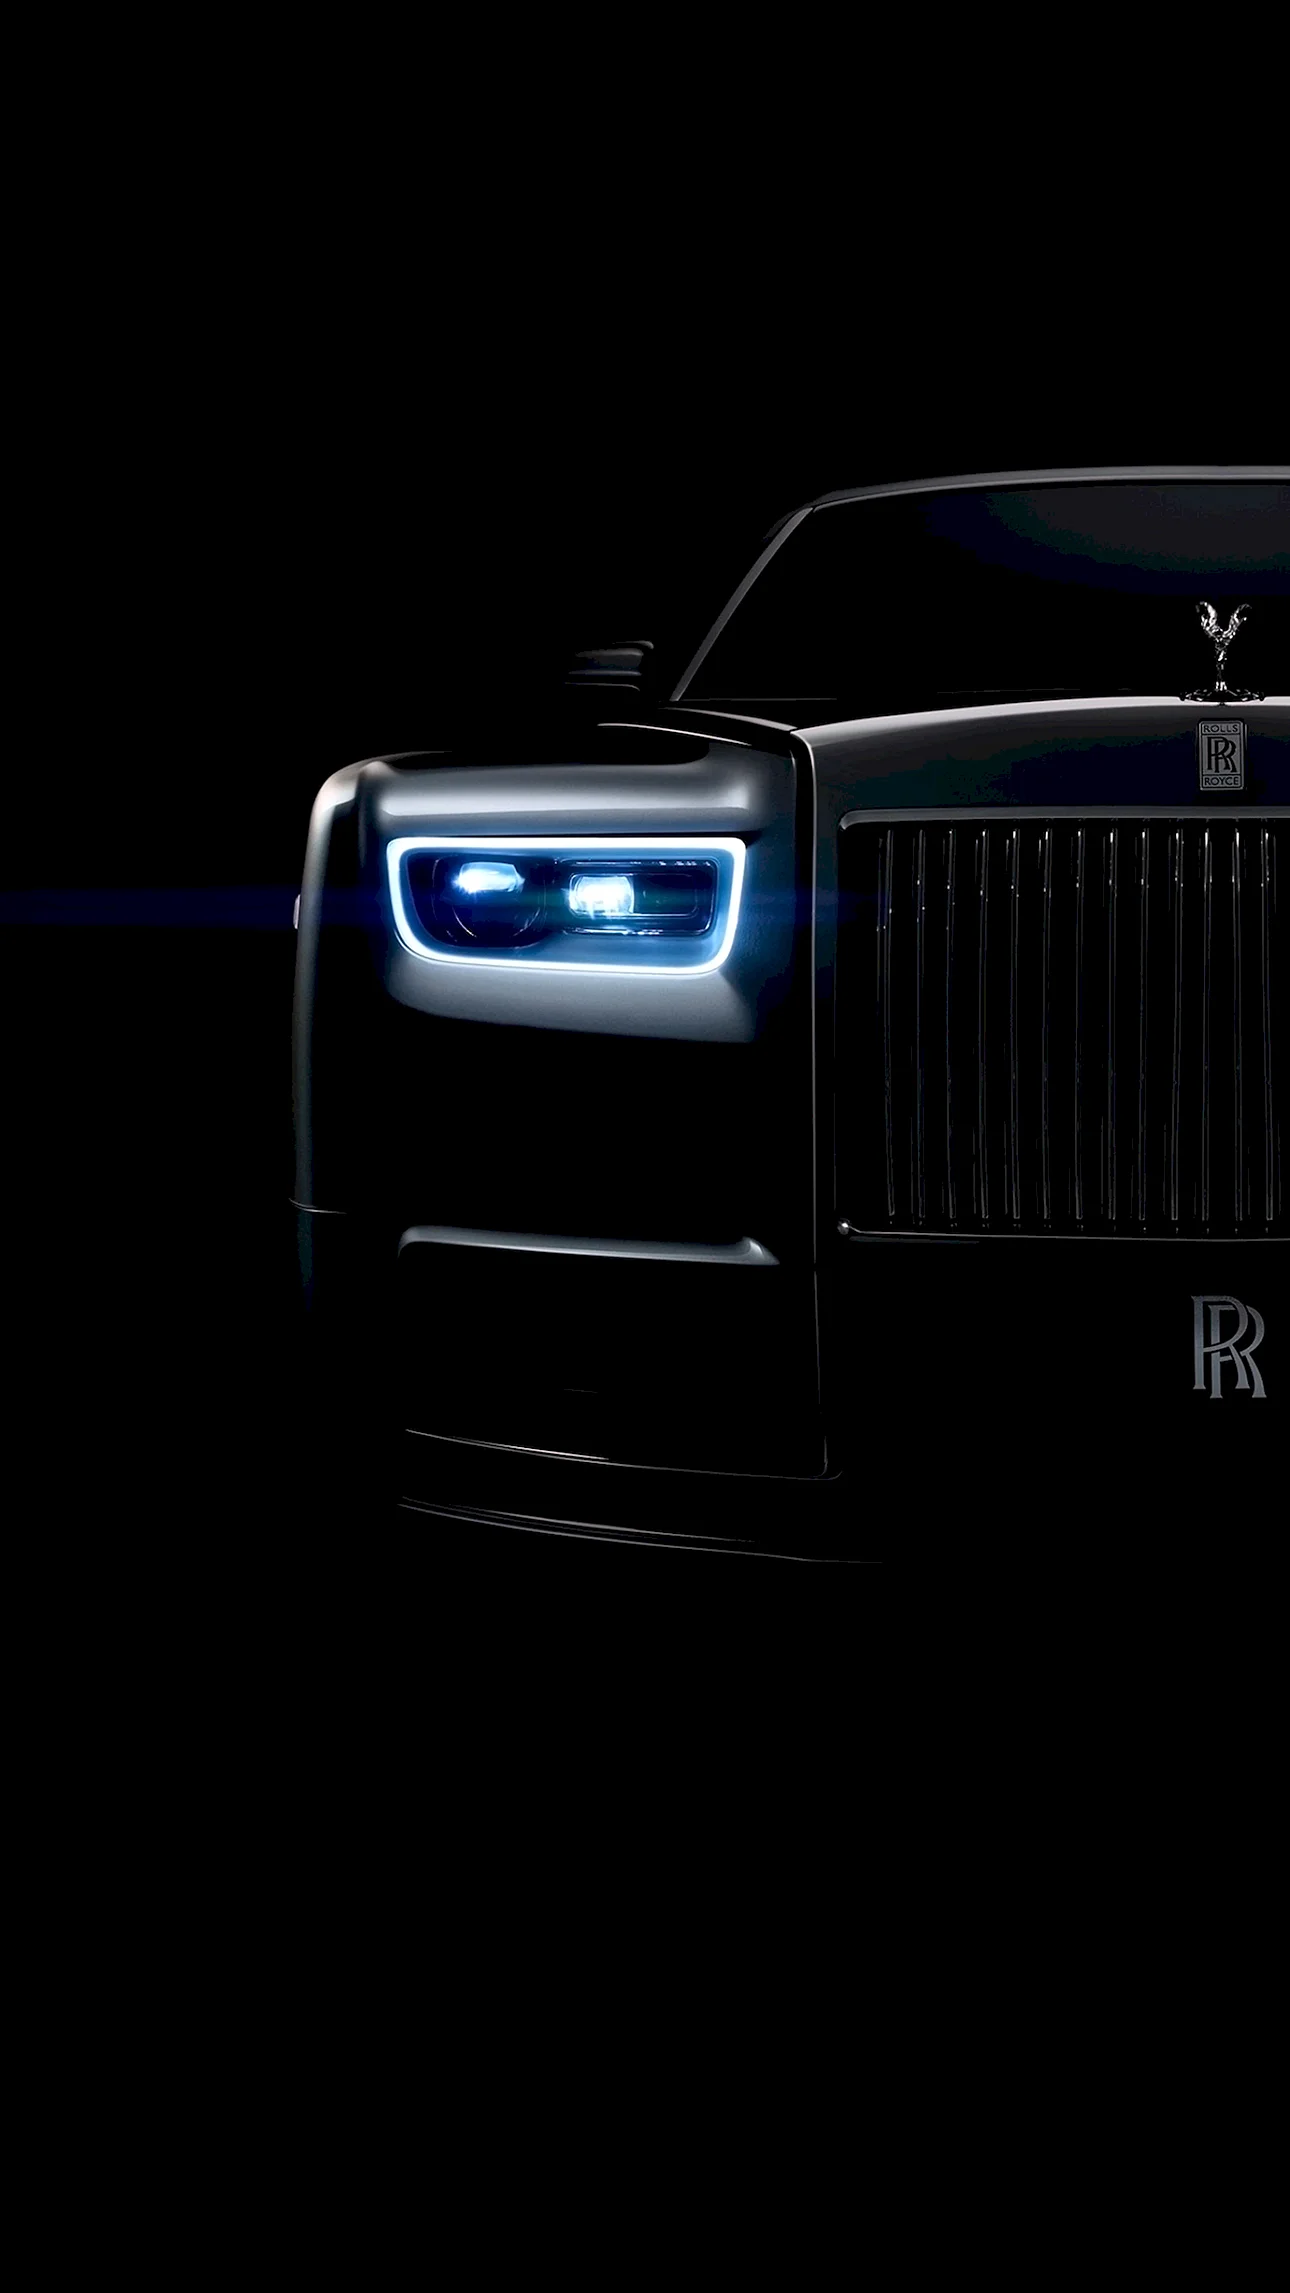 Rolls Royce Phantom 8 Wallpaper For iPhone